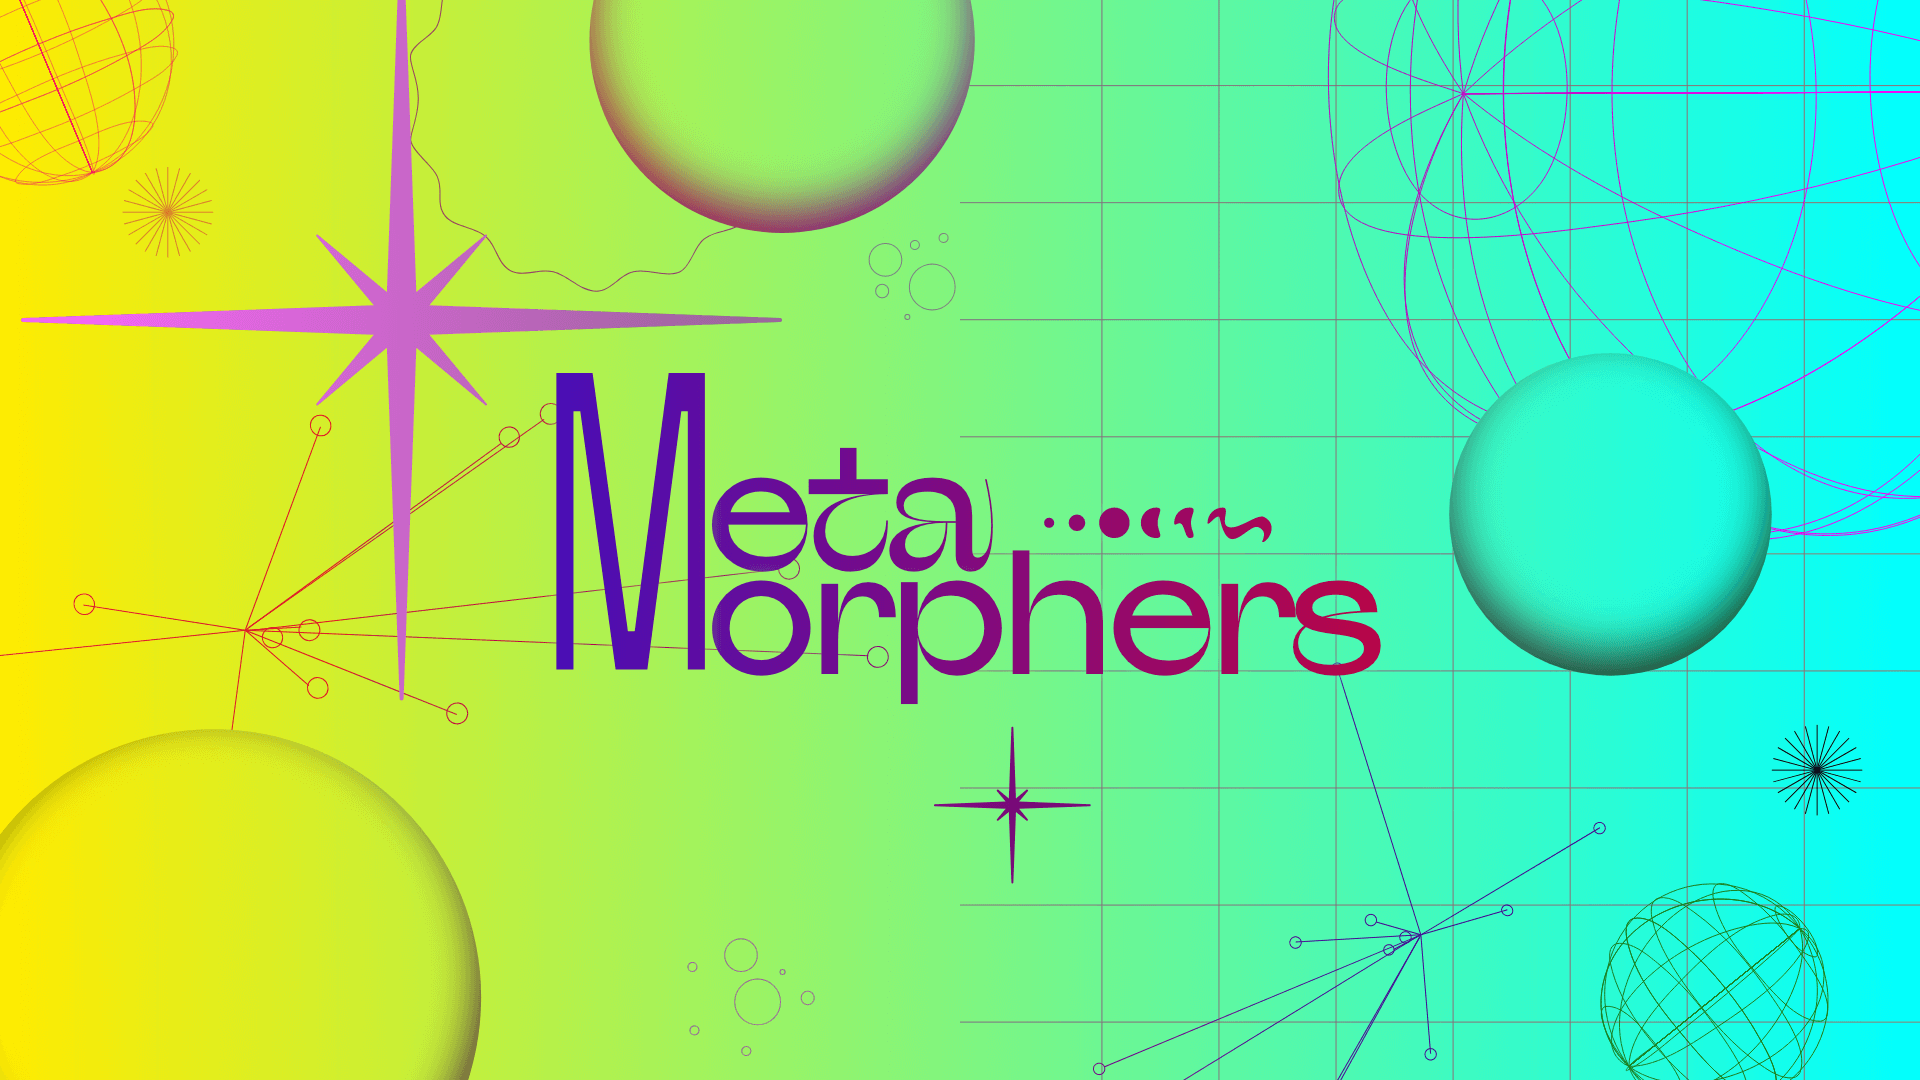 MetaMorphers: Agents of Change